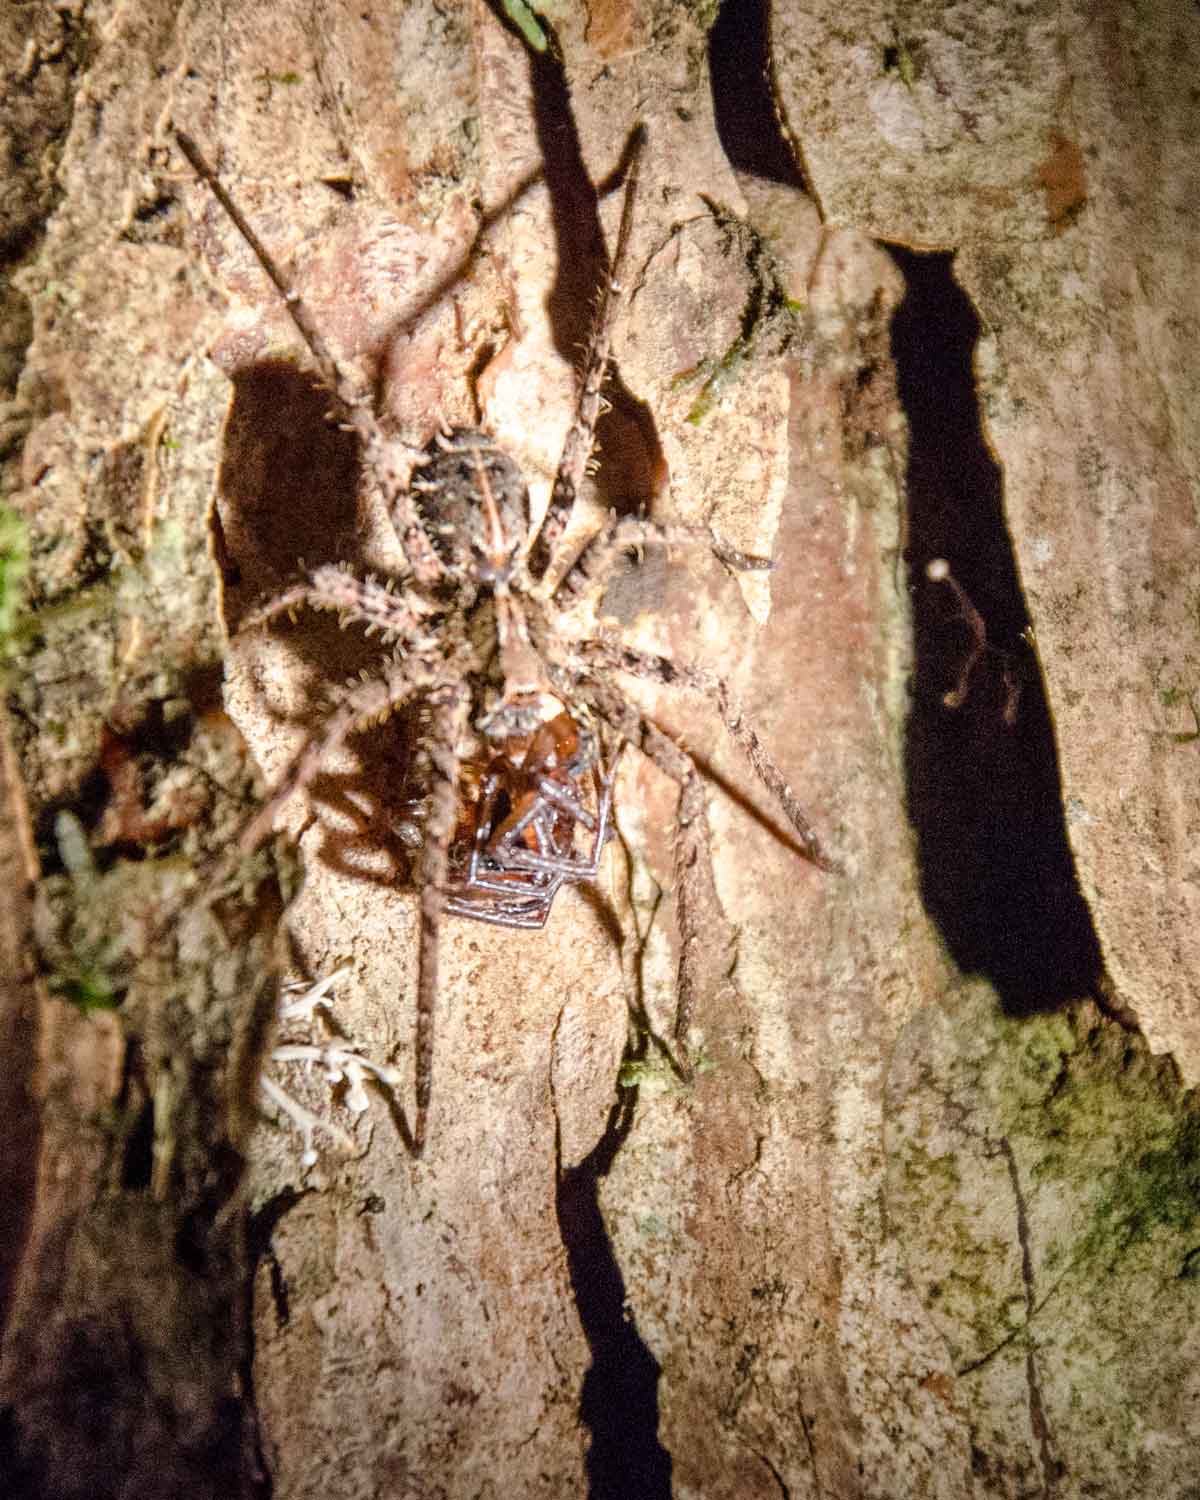 A unidentified spider with prey; Ecolodge San Jorge de Milpe | ©Angela Drake